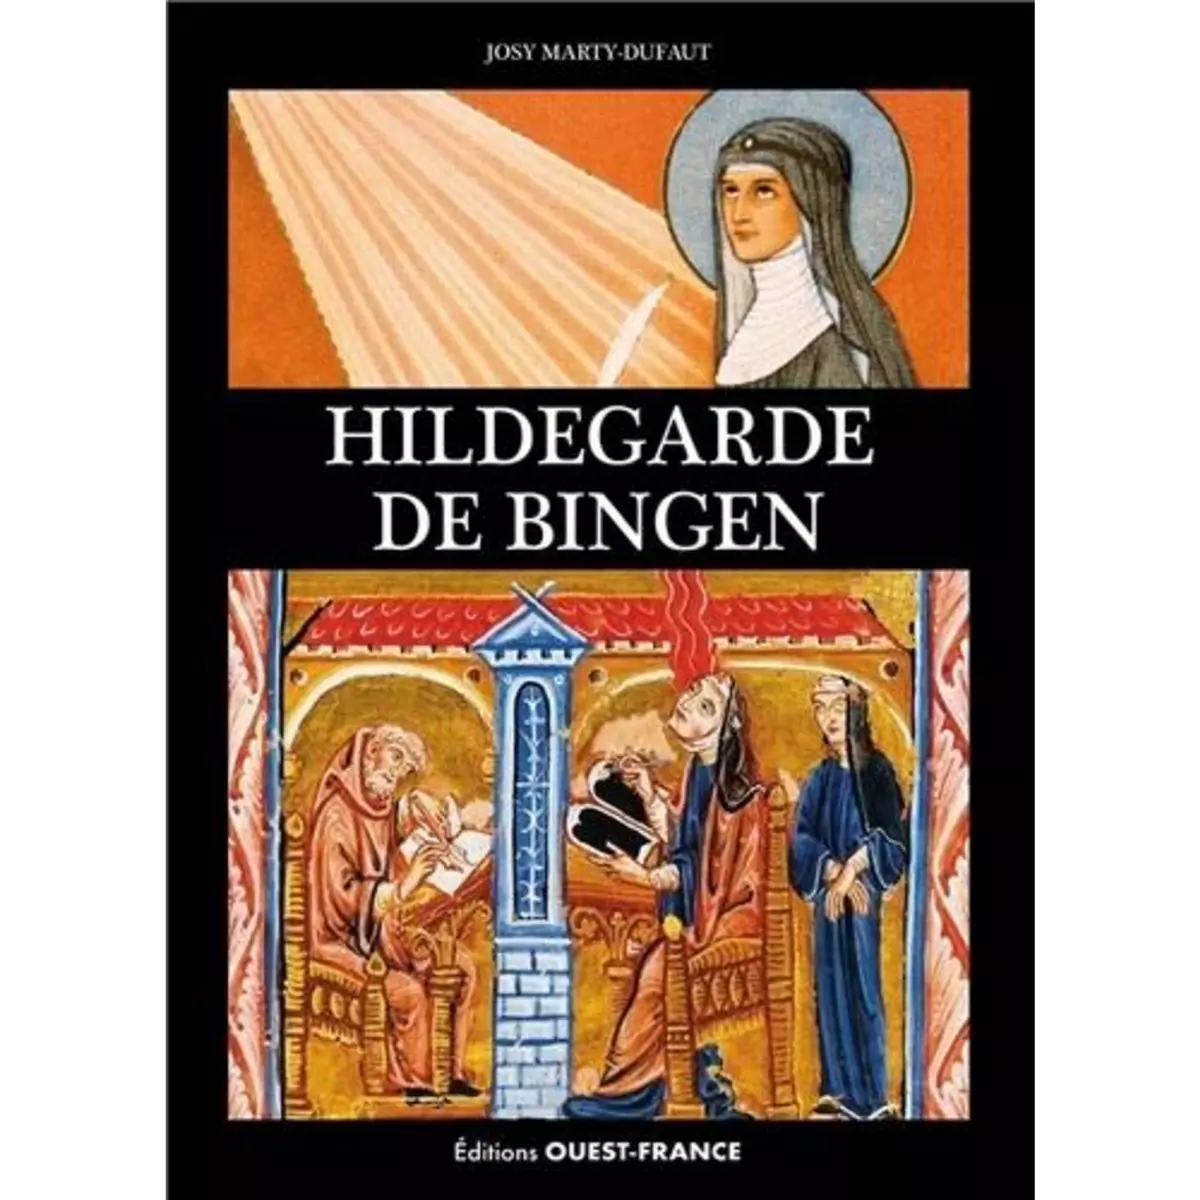  HILDEGARDE DE BINGEN, Marty-Dufaut Josy